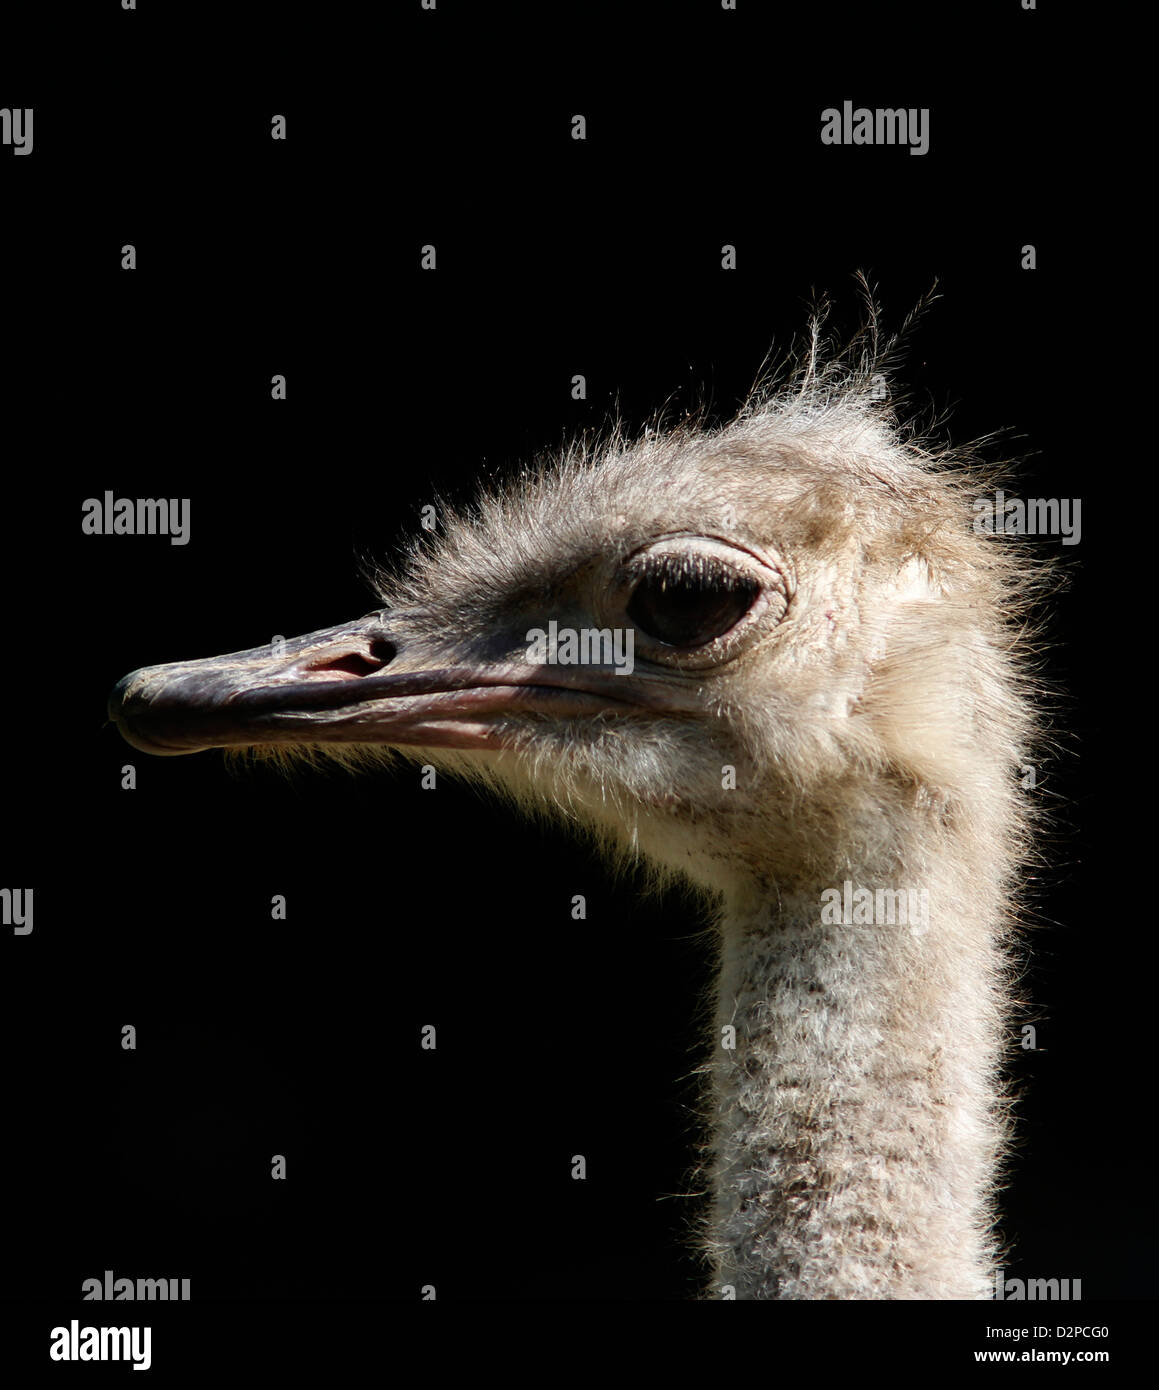 Cerca de avestruz cabeza Memphis Zoo ave no voladora Foto de stock